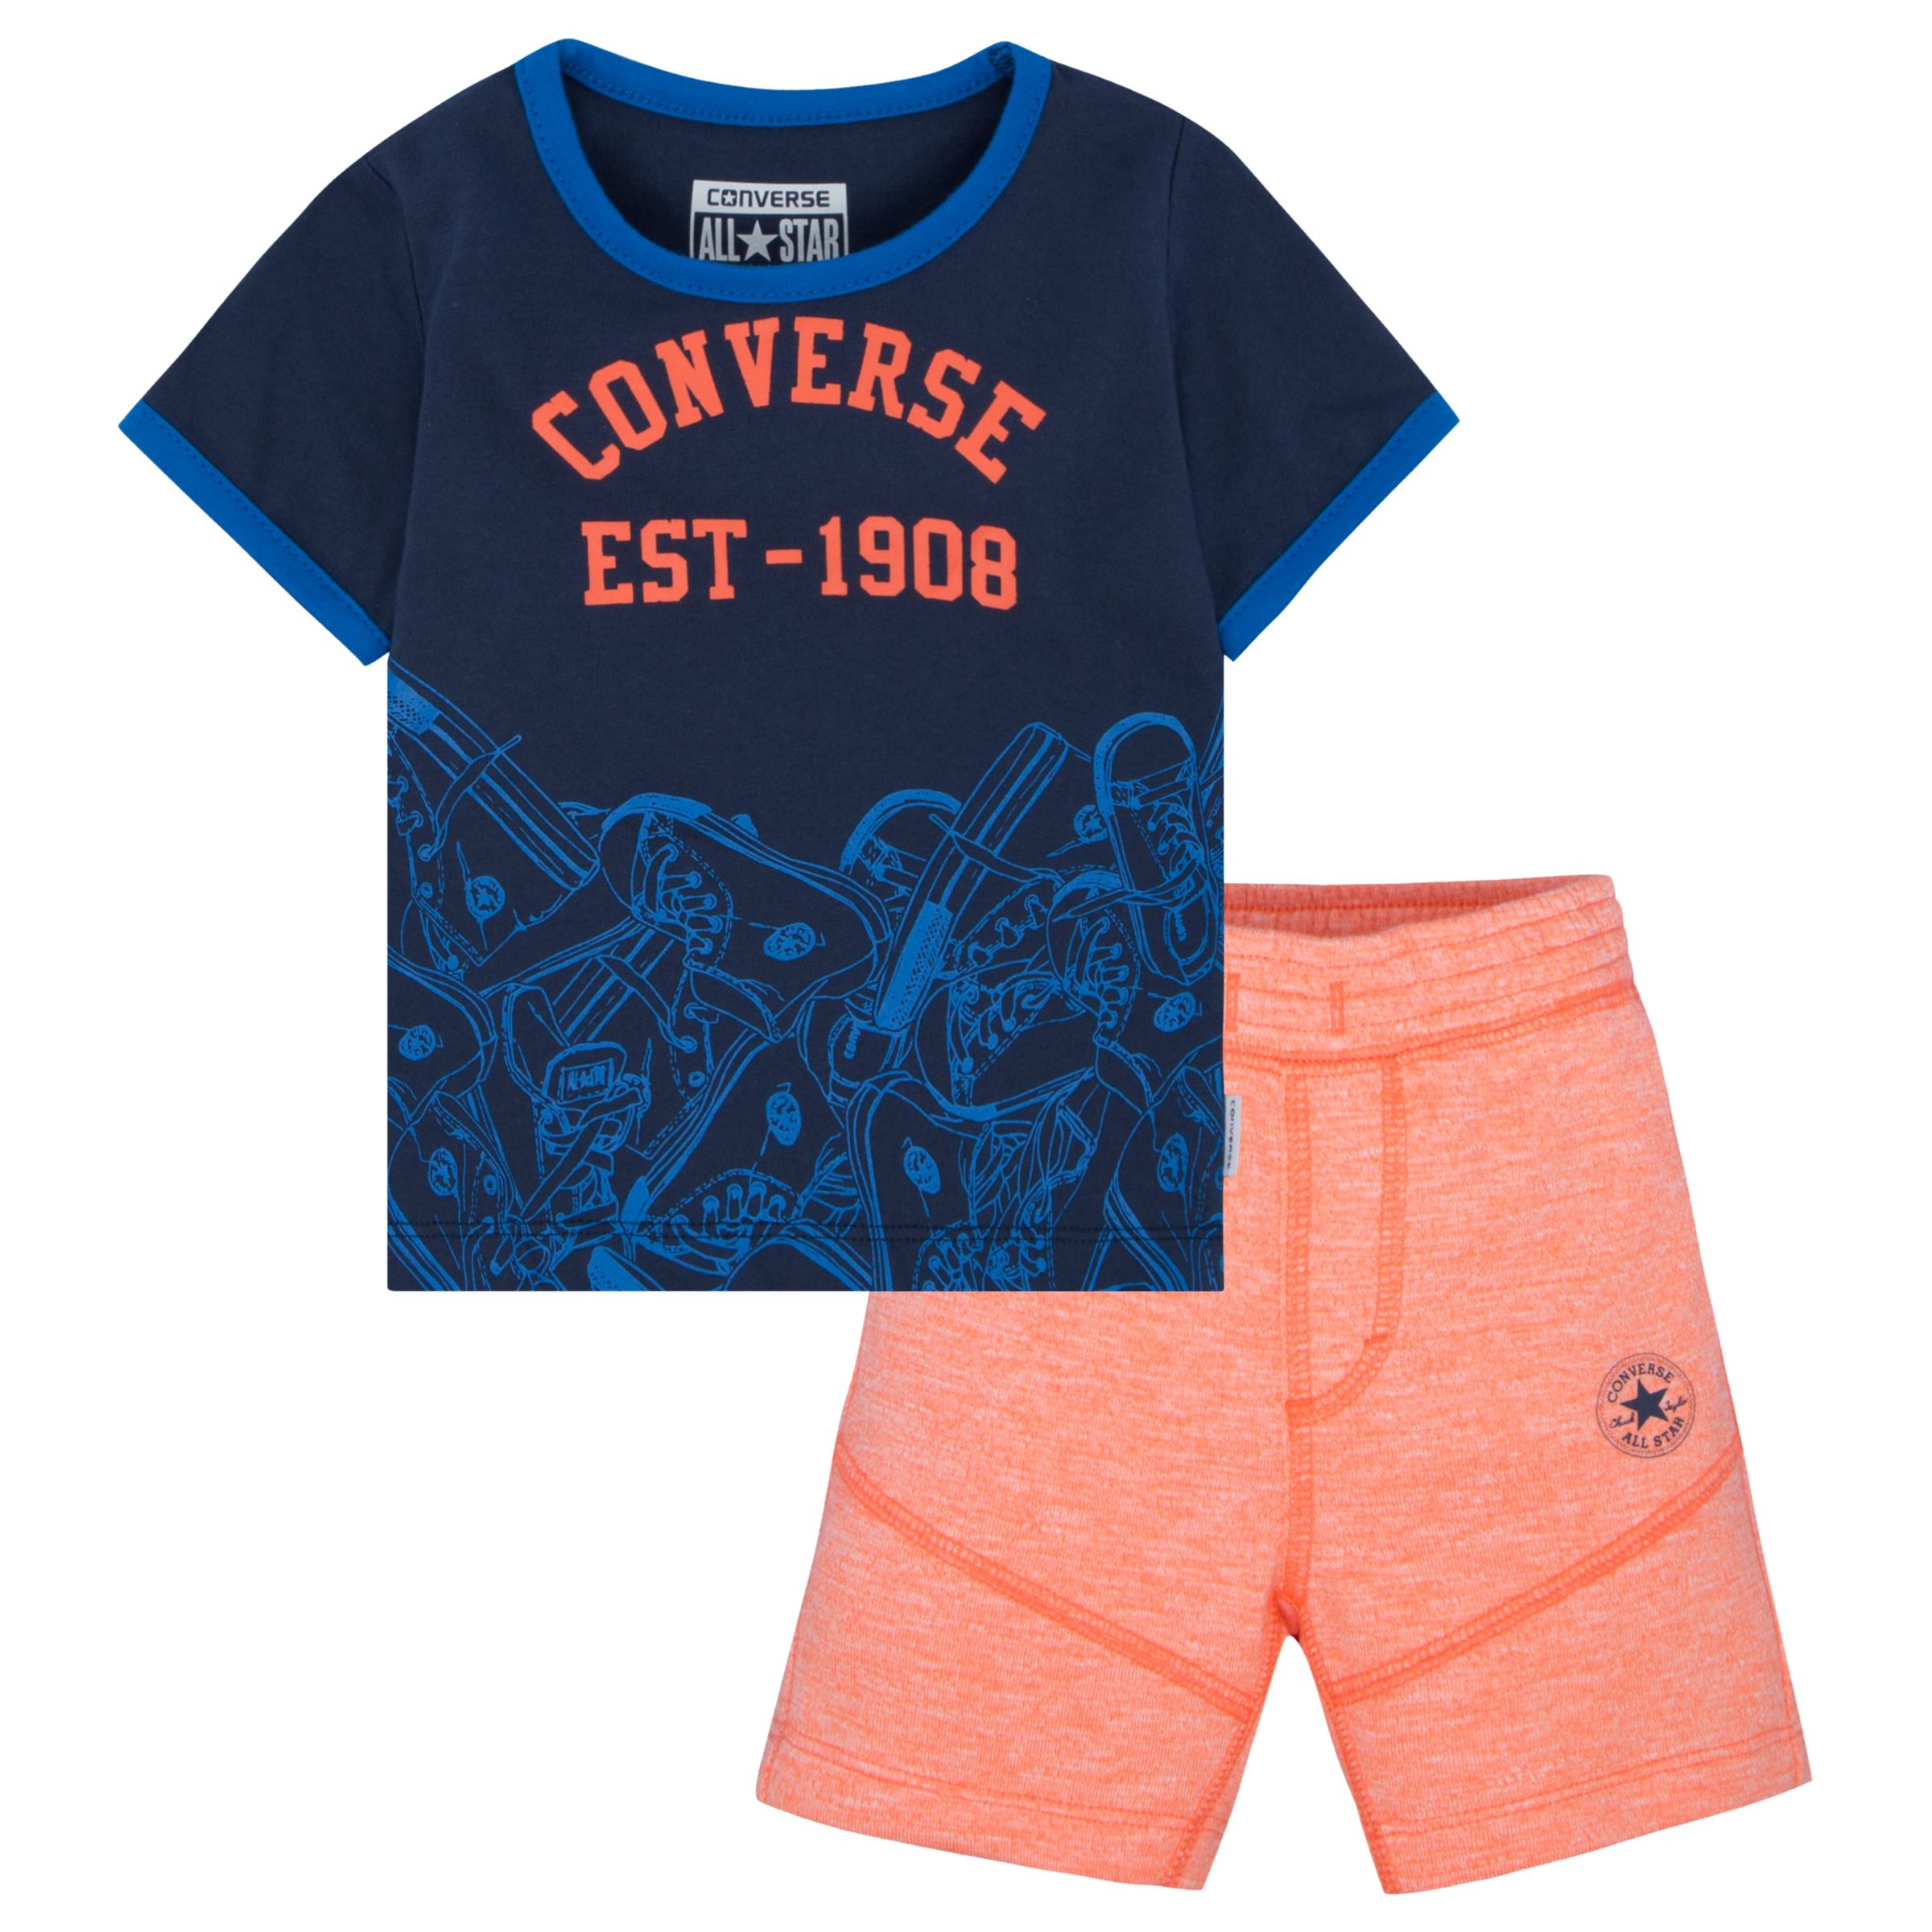 converse baby clothes